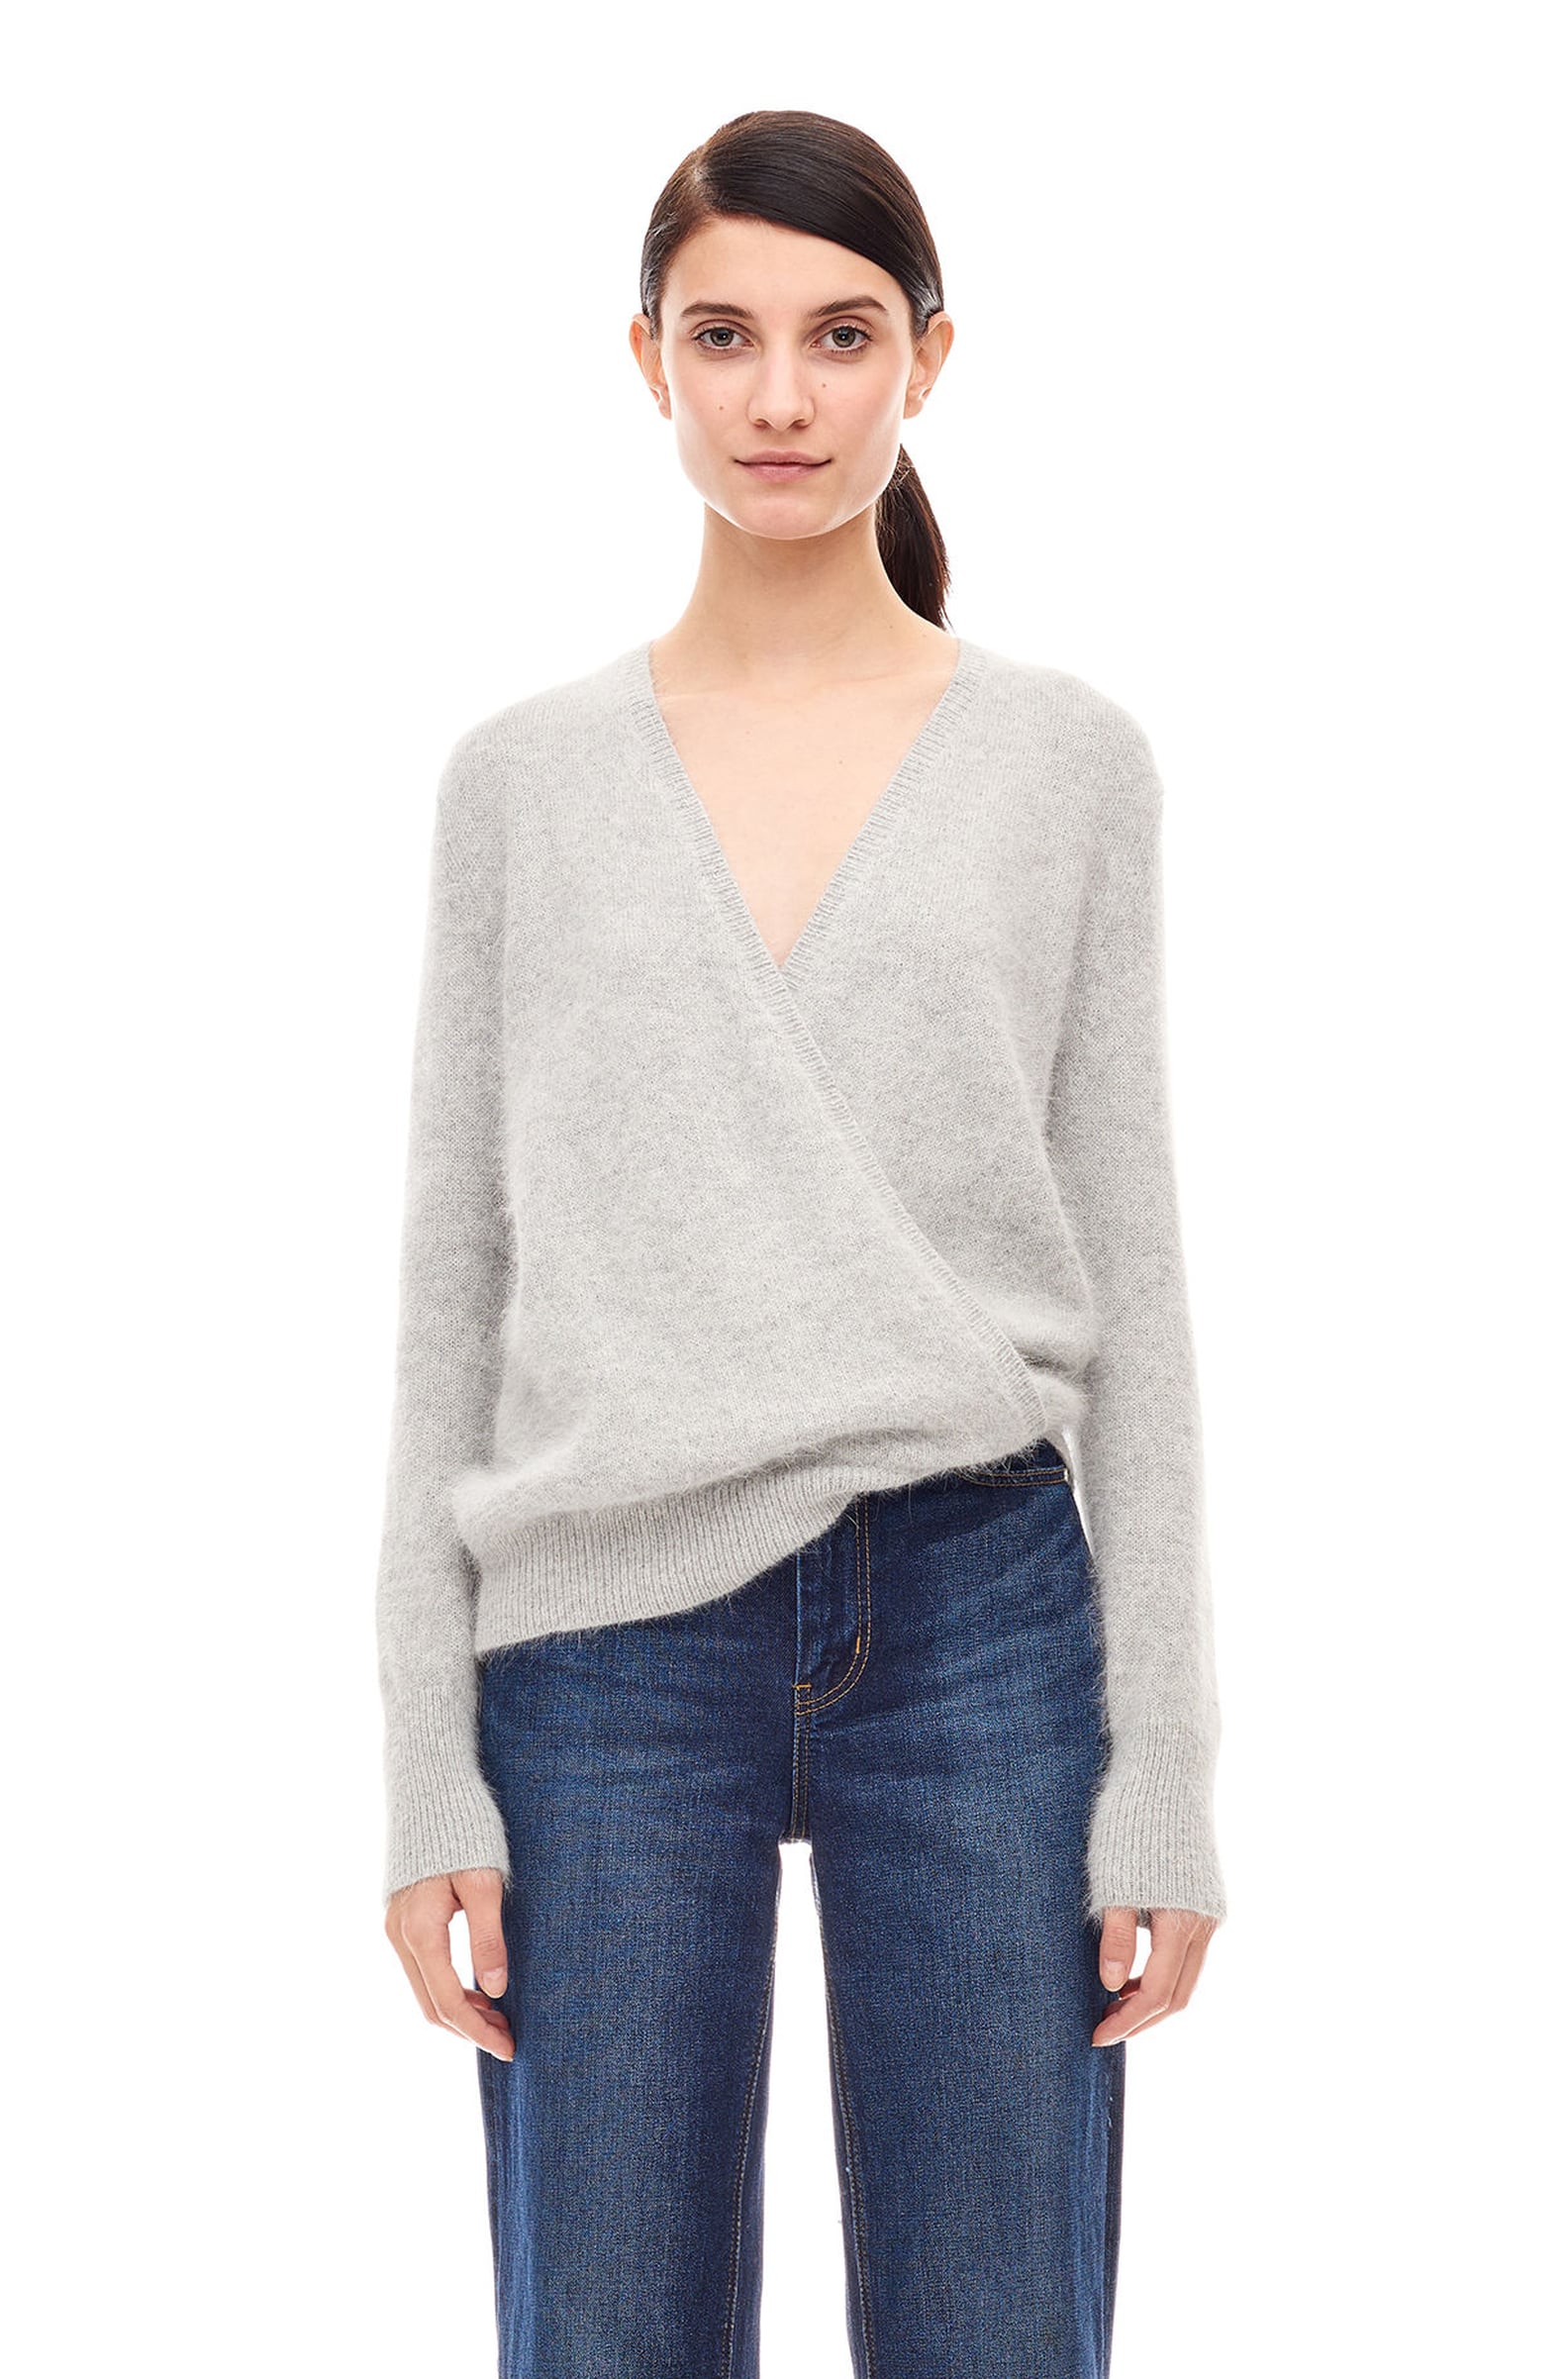 Wrap Sweater Shopping | POPSUGAR Fashion